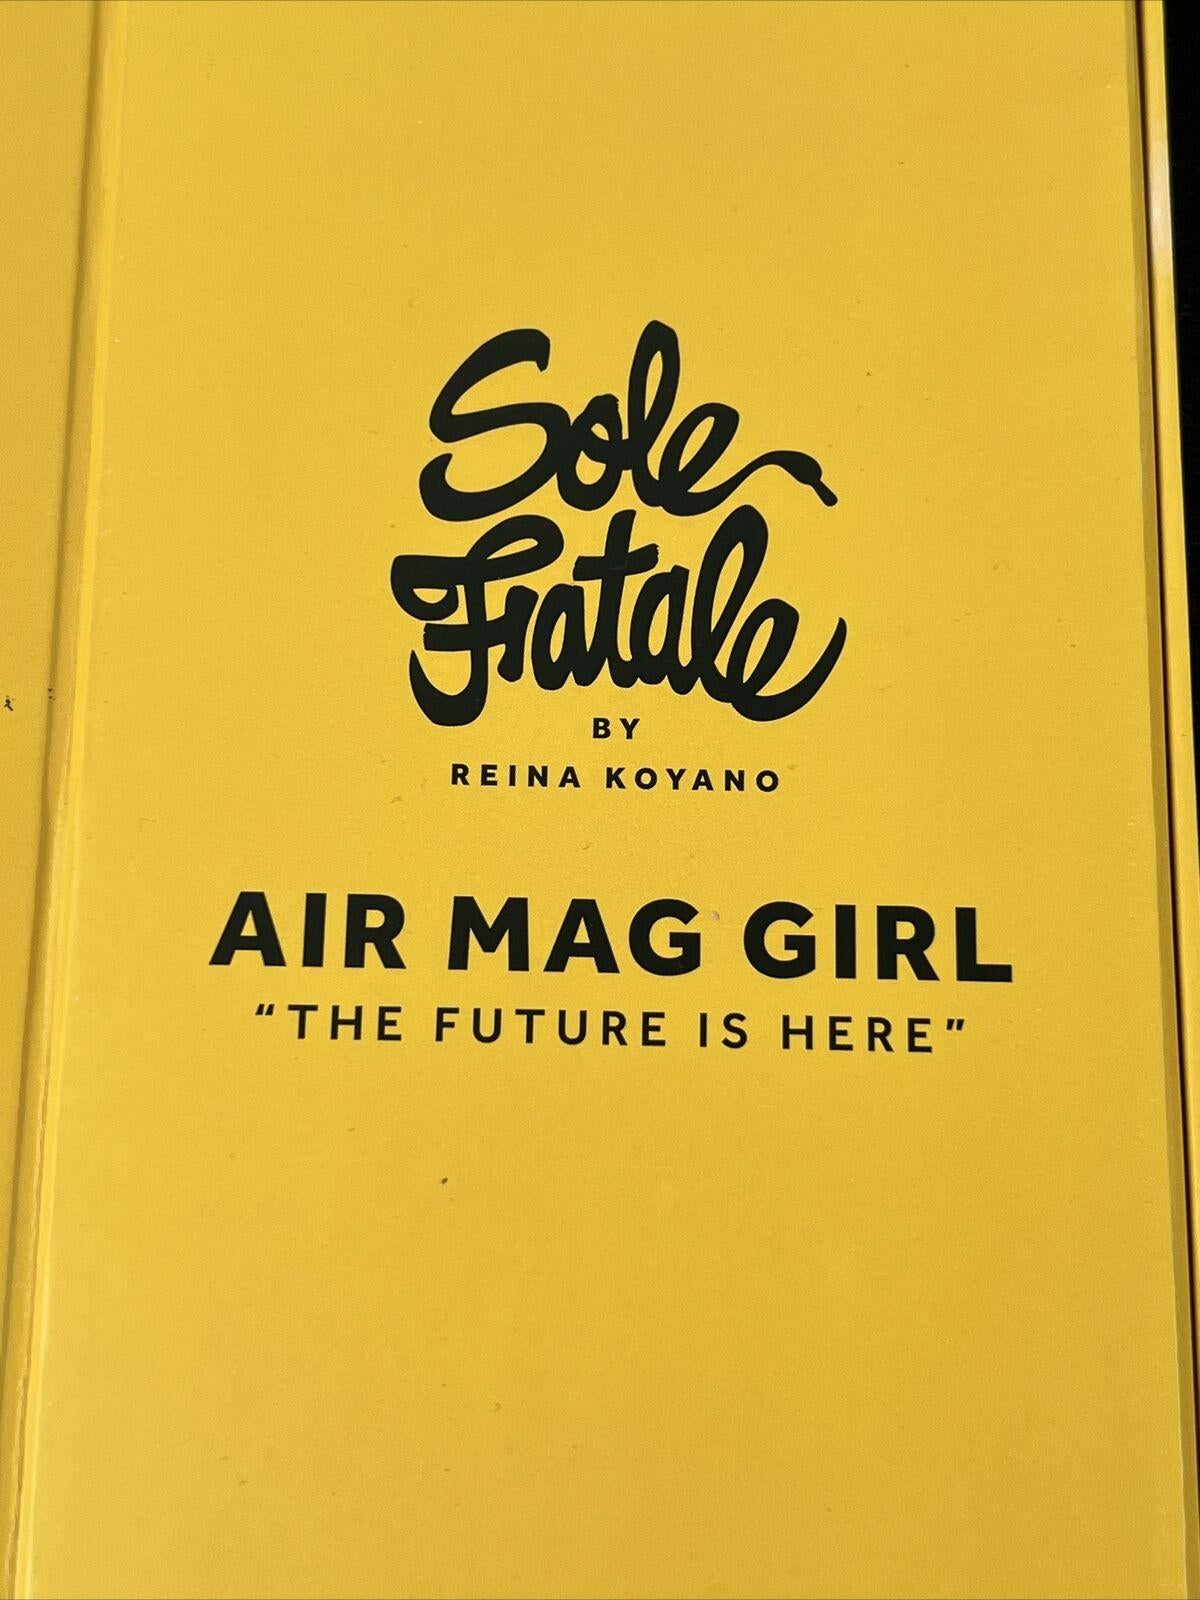 Nike Air Mag Girl Surrealism Vinyl Figure Designer Con 2017 - Sculpture by Reina Koyano